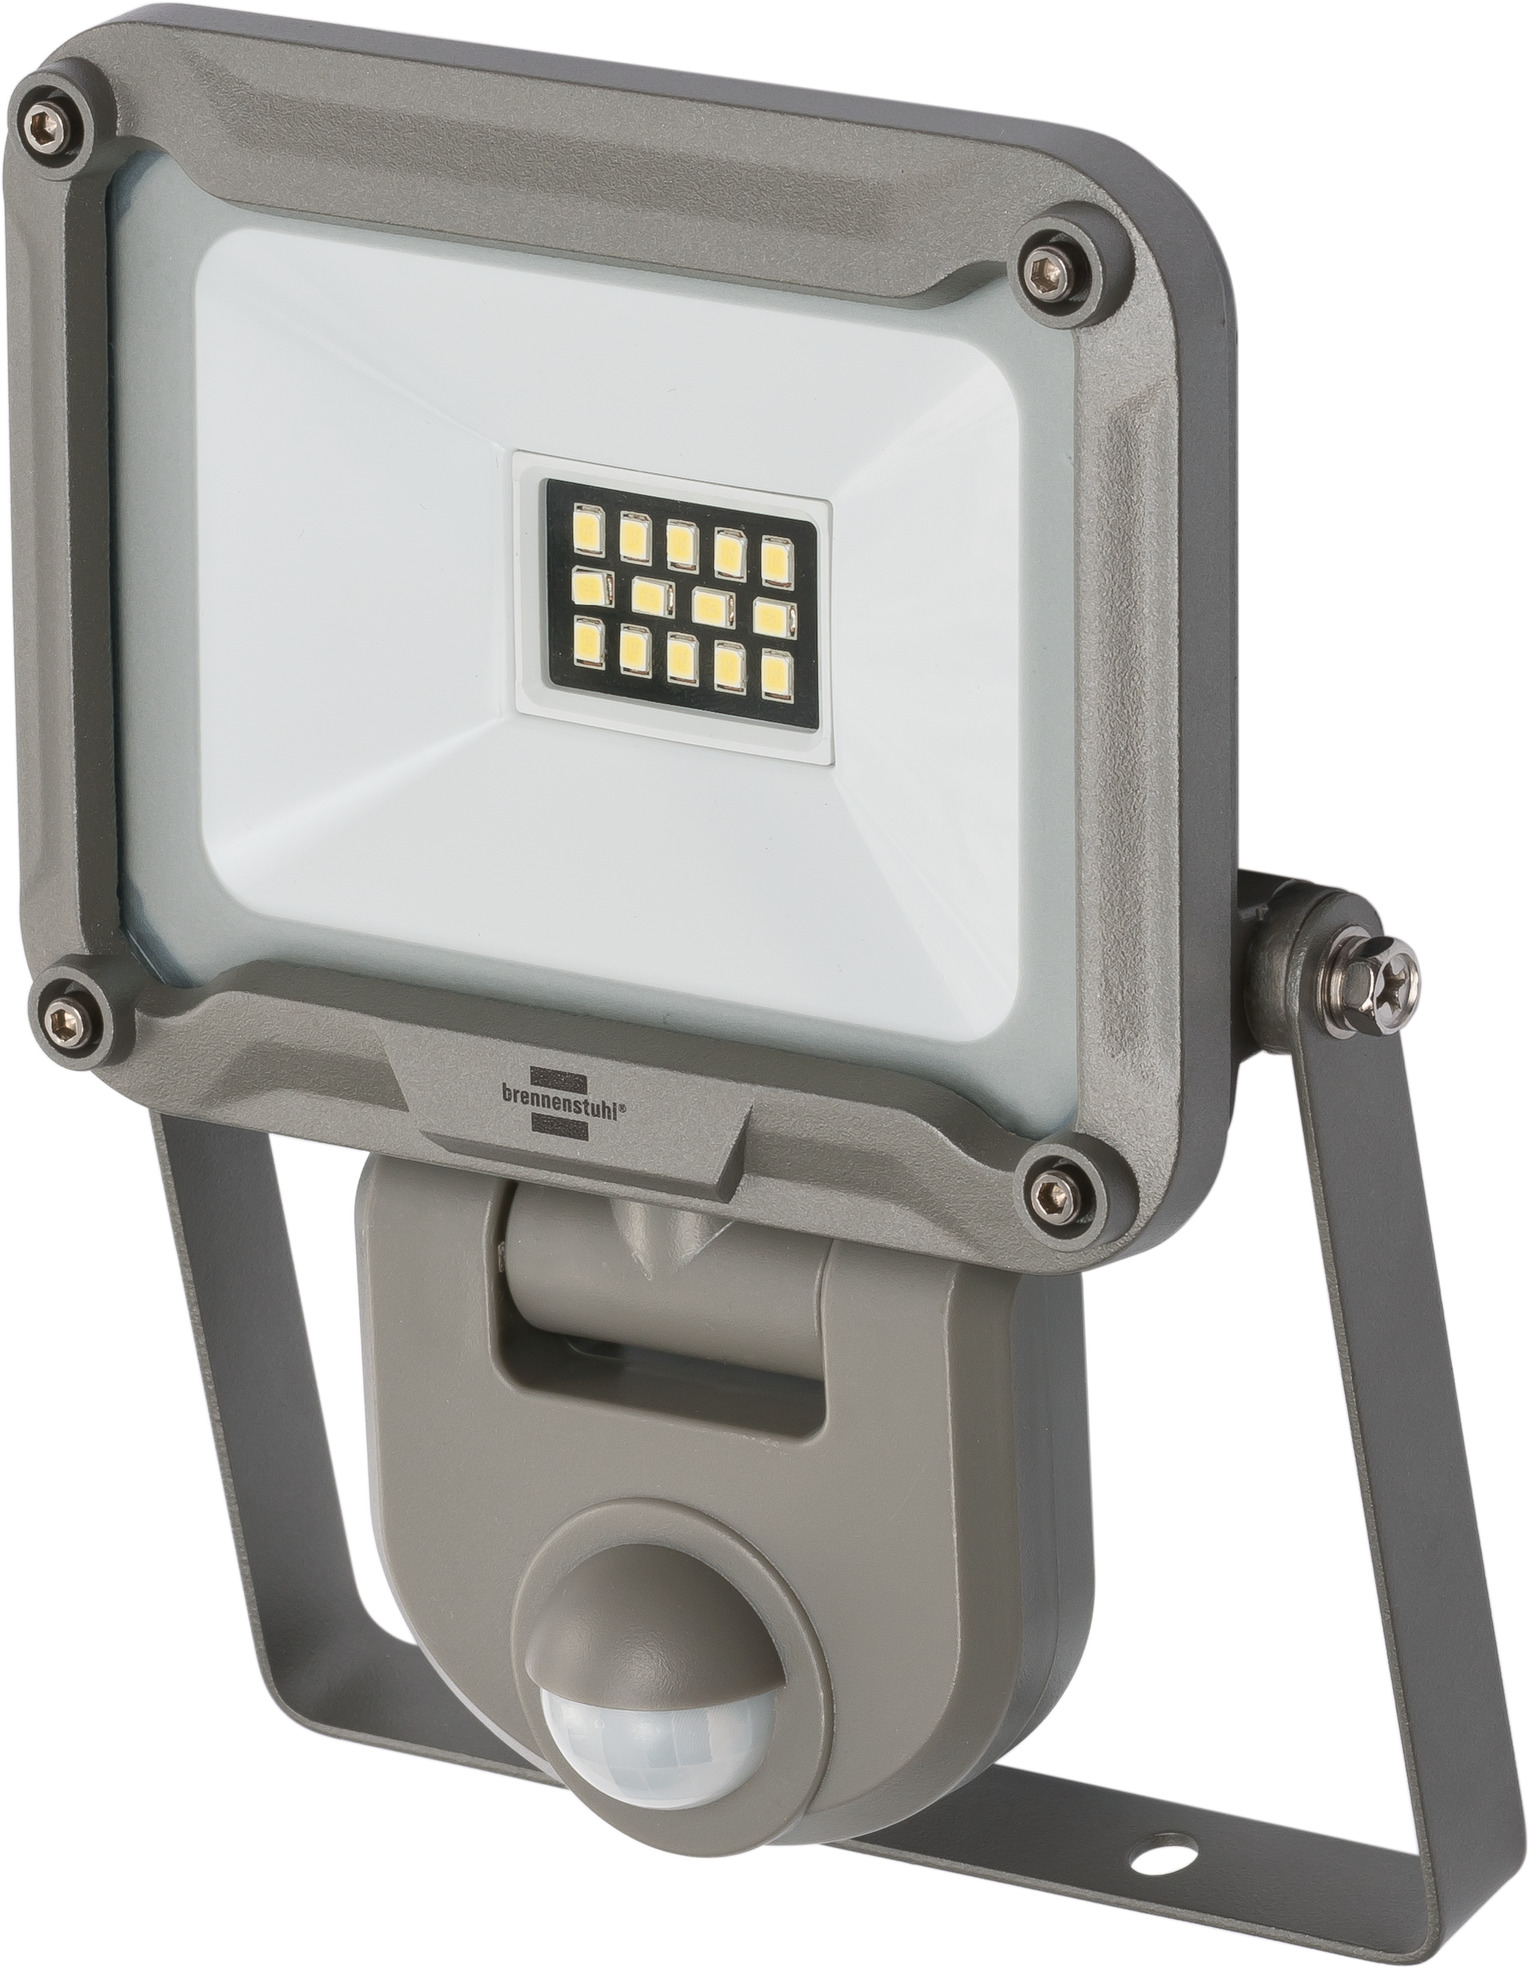 Bloemlezing Echter Commissie LED buitenlamp JARO 1050 P met infrarood bewegingsmelder 980lm, 9,6W, IP54  | brennenstuhl®